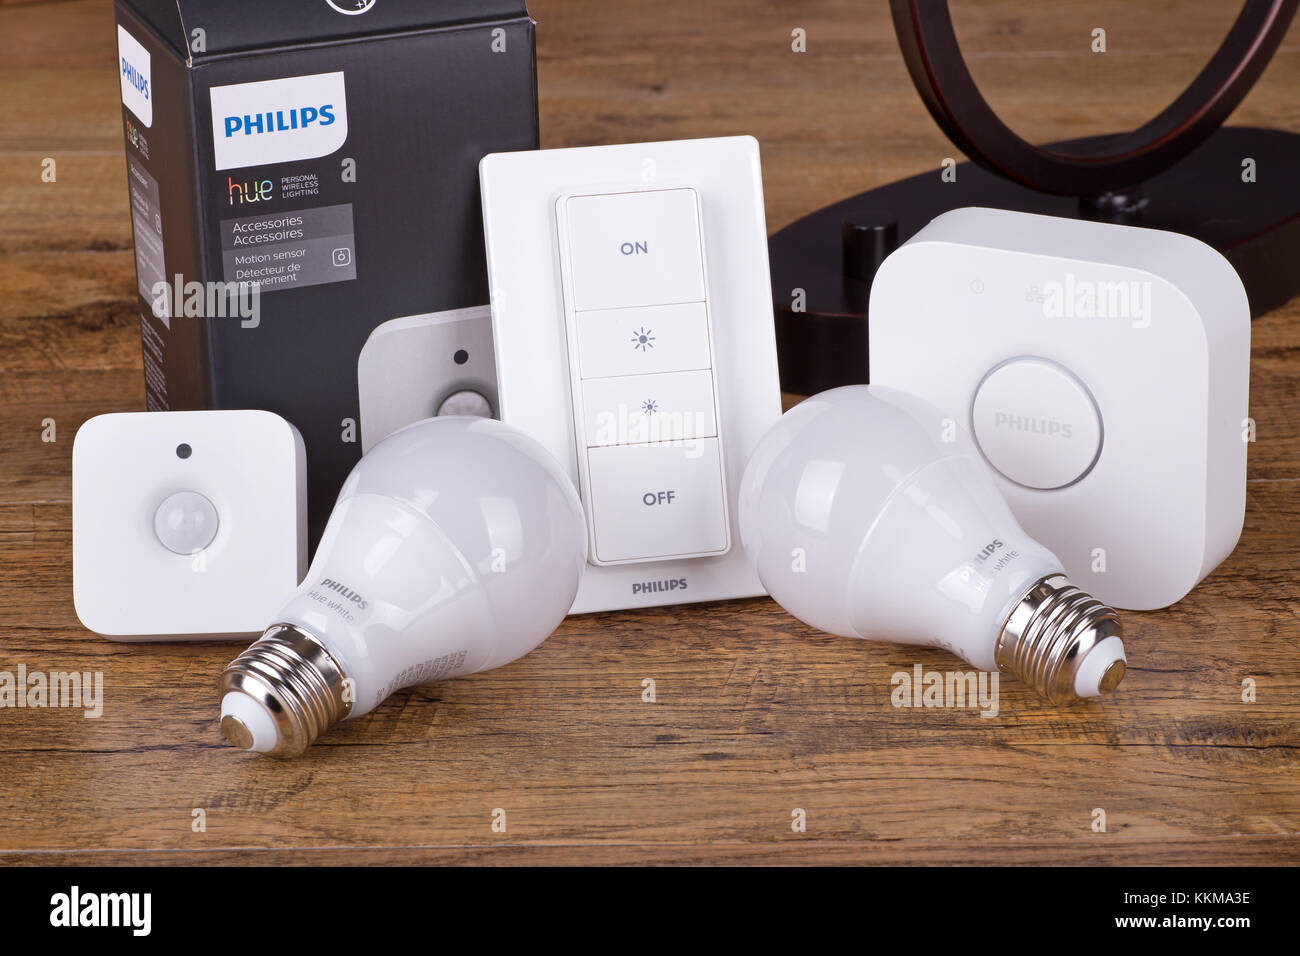 Philips launches E14 Hue bulbs